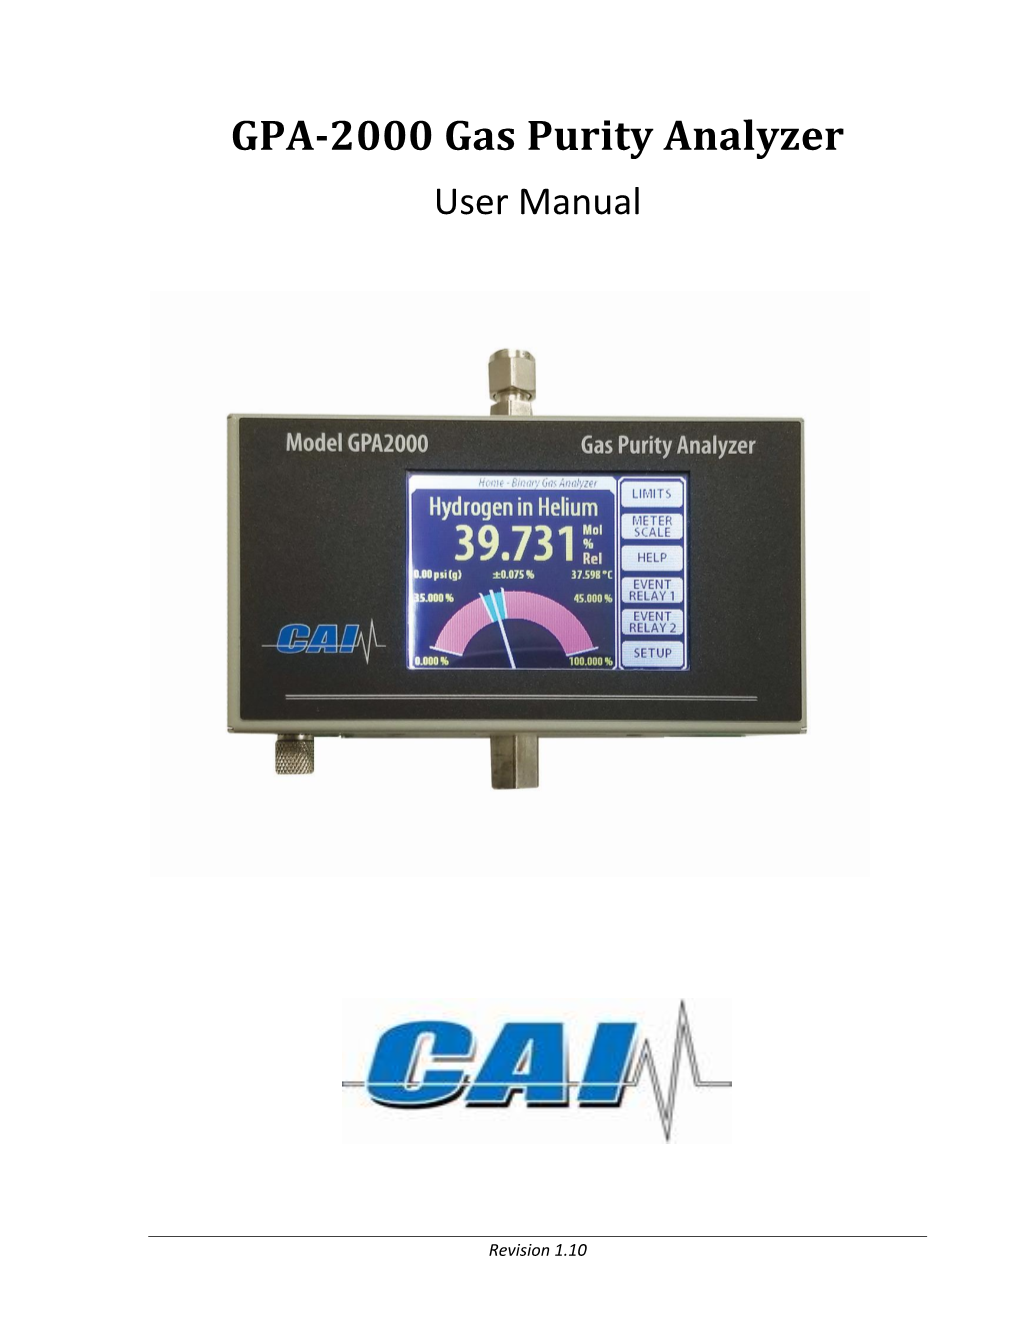 GPA-2000 Gas Purity Analyzer User Manual